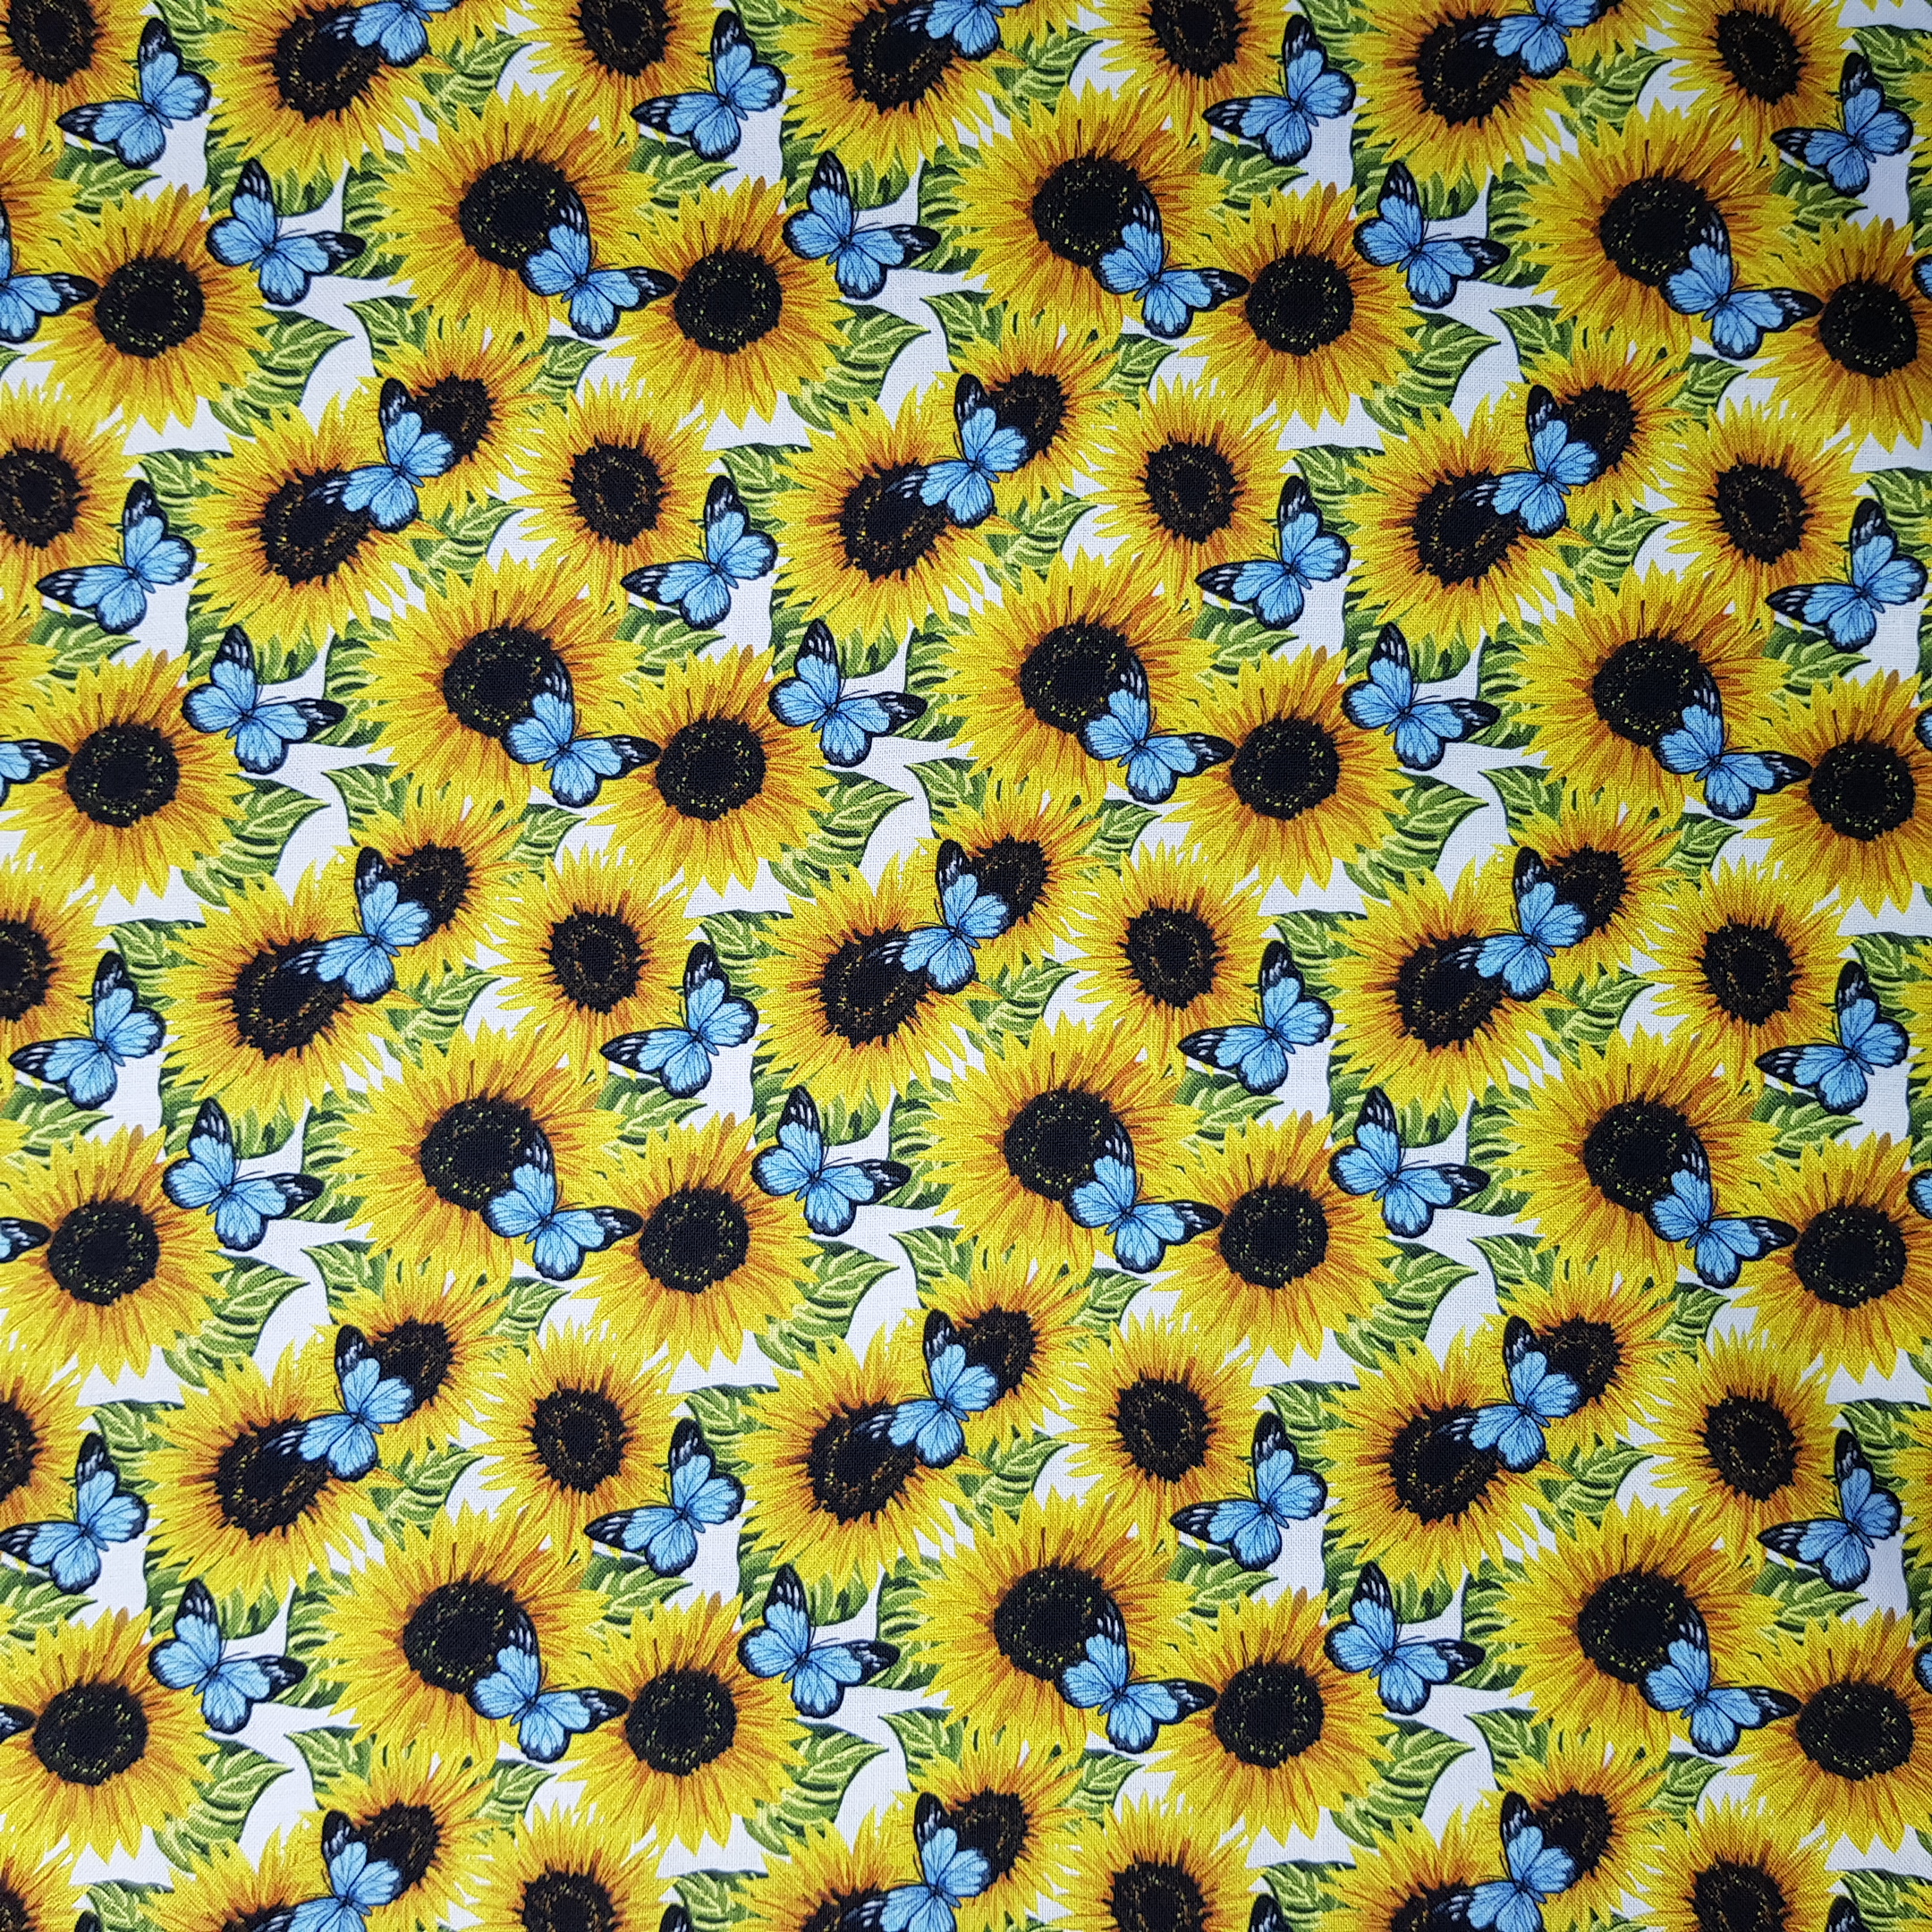 Sunflowers - Printed Cotton 